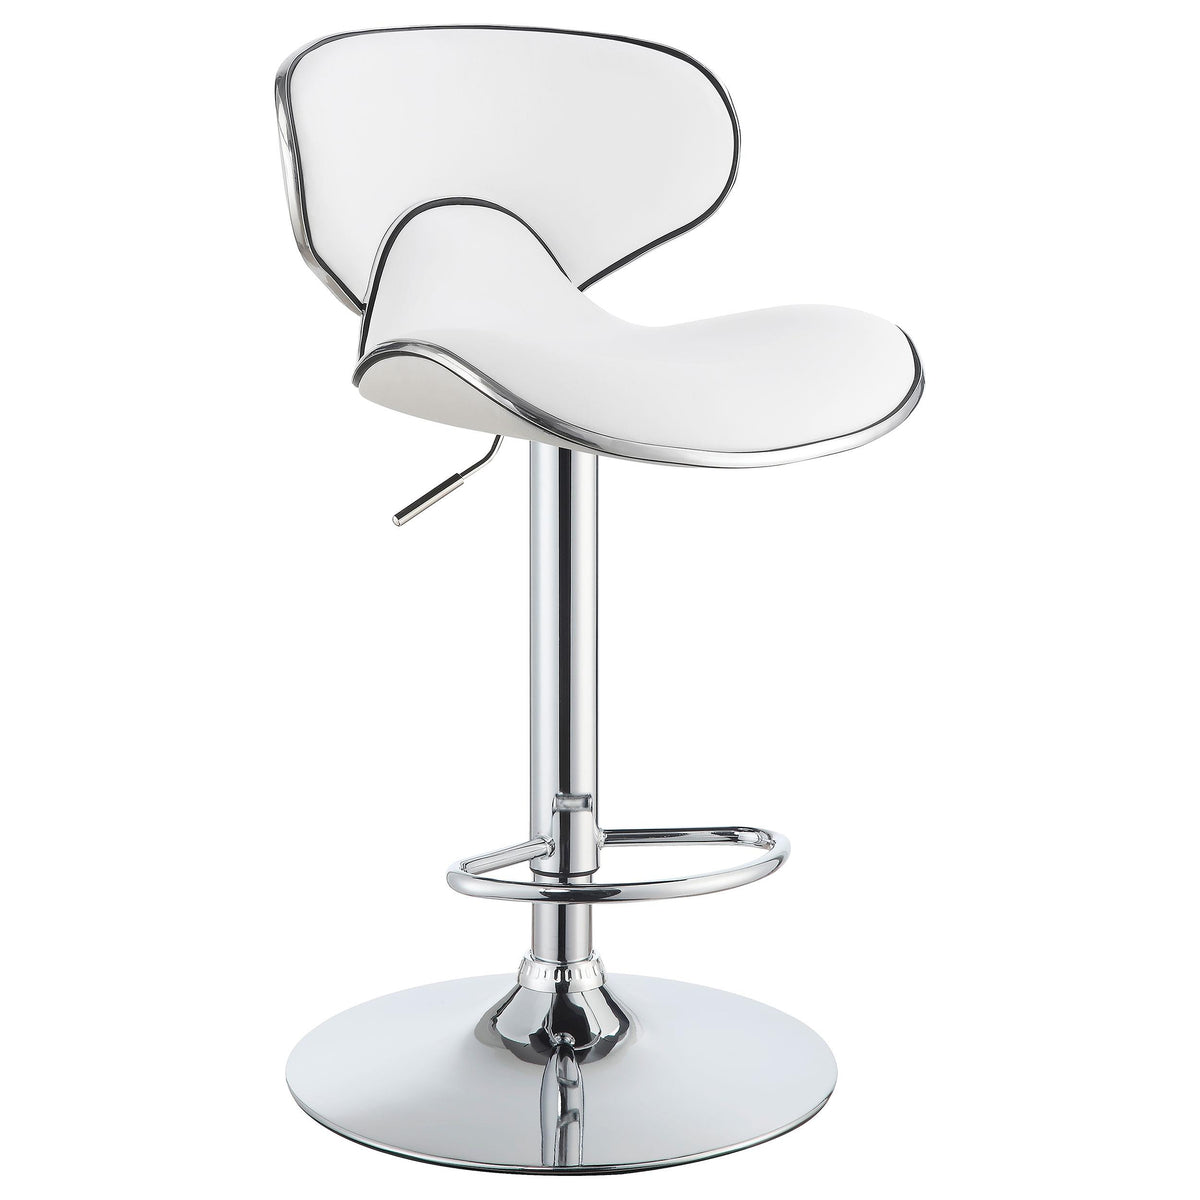 Edenton Upholstered Adjustable Height Bar Stools White and Chrome (Set of 2)  Las Vegas Furniture Stores